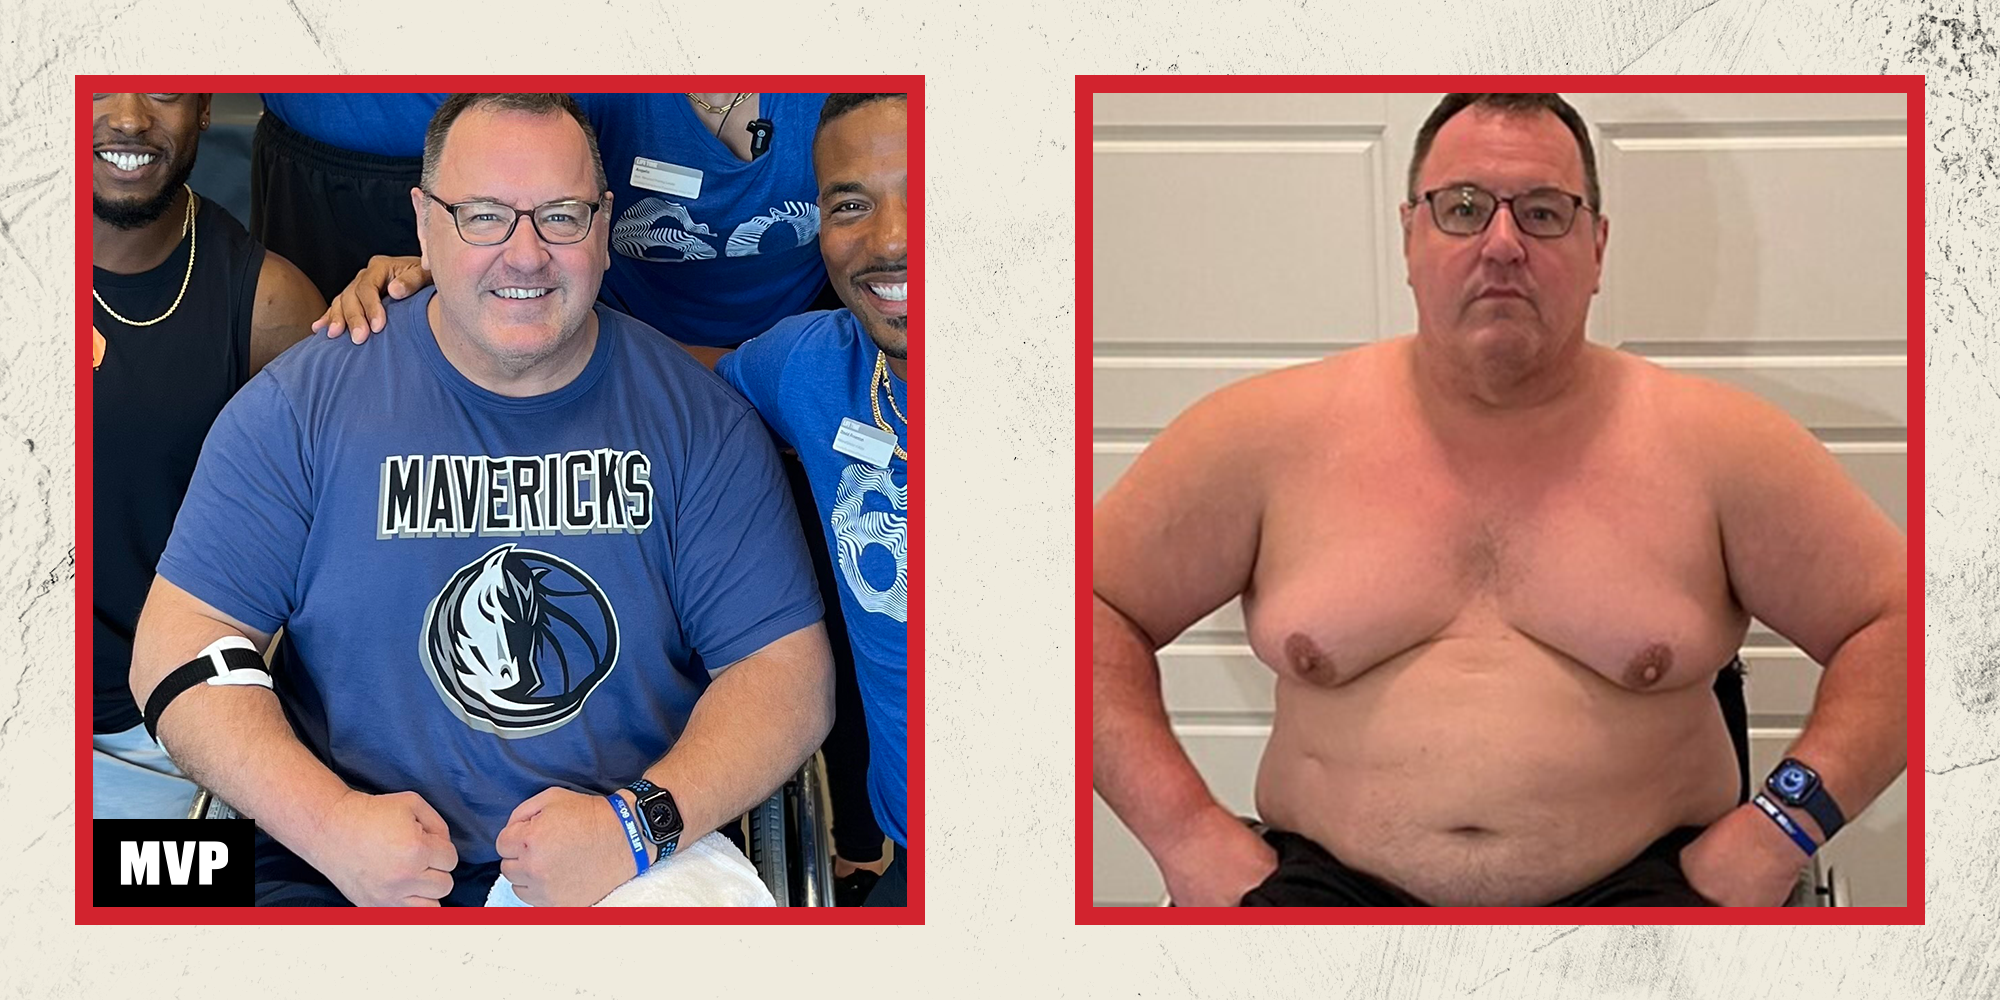 Obese' MrBeast reveals shocking beach bod transformation